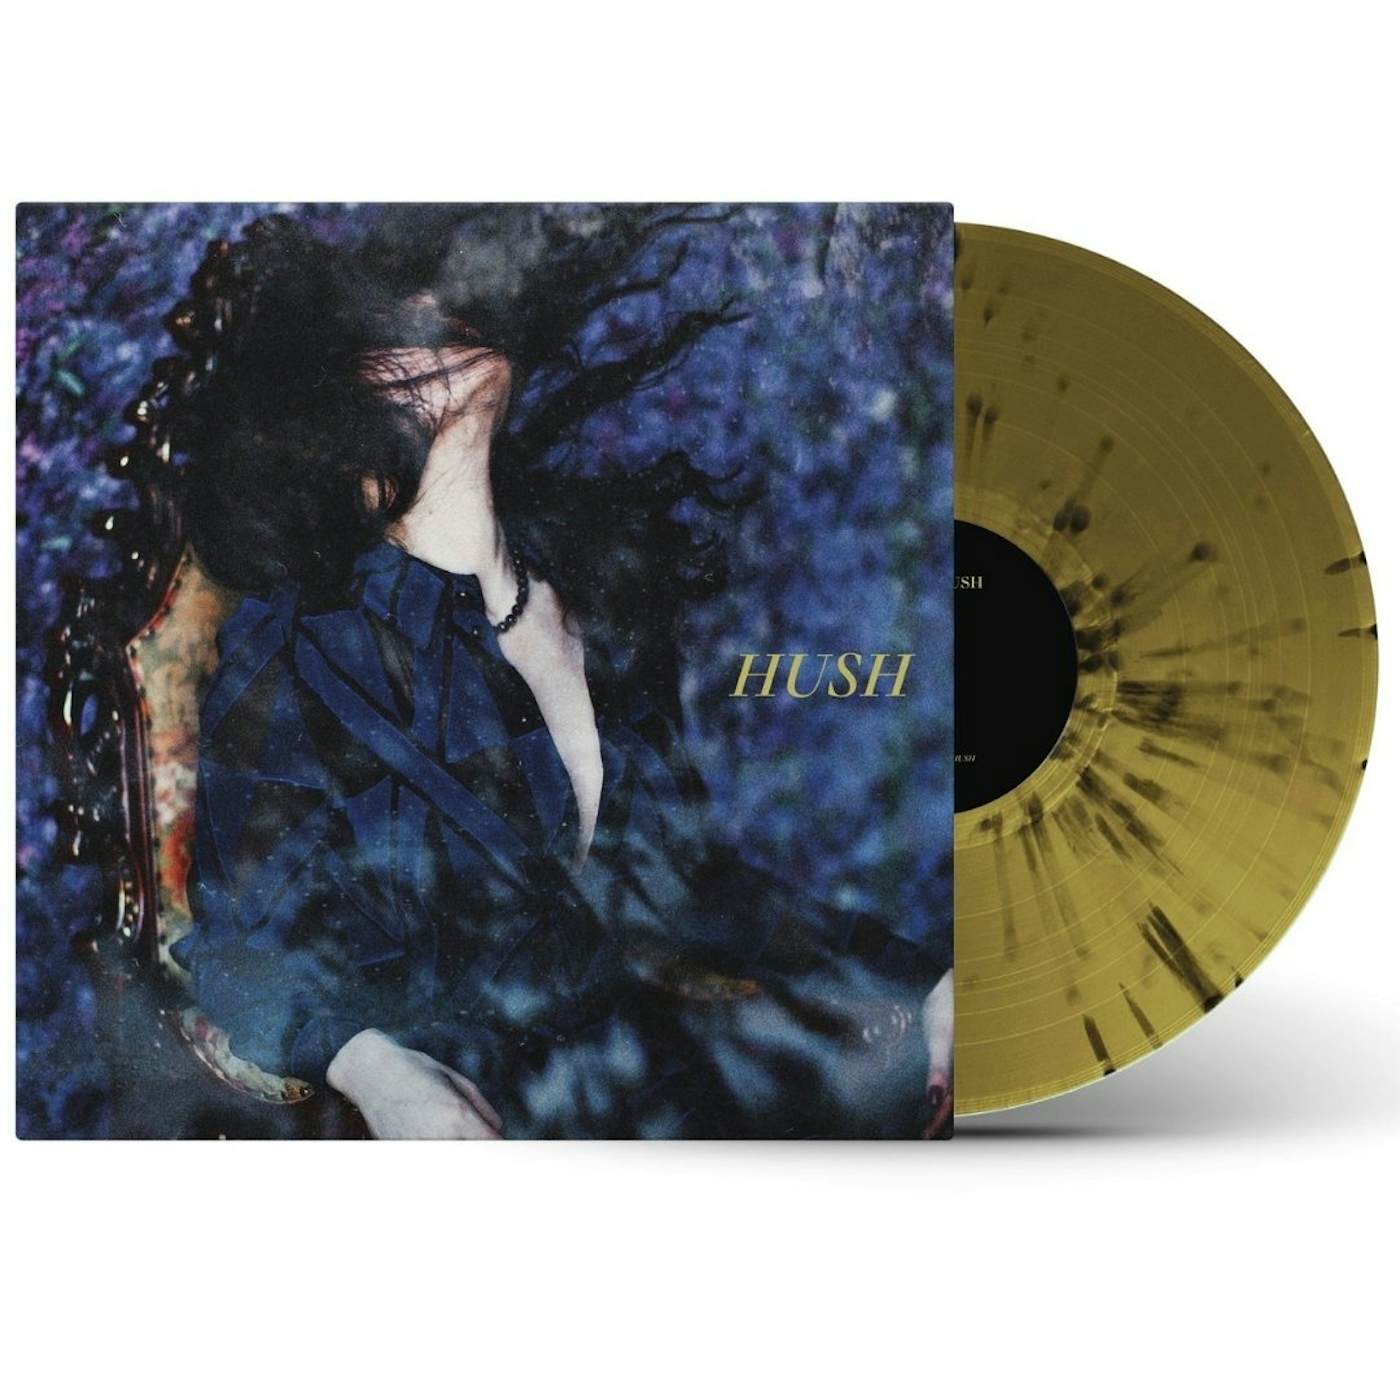 Slow Crush - “Hush" LP *LIMITED EDITION* Vinyl in Gatefold Sleeve